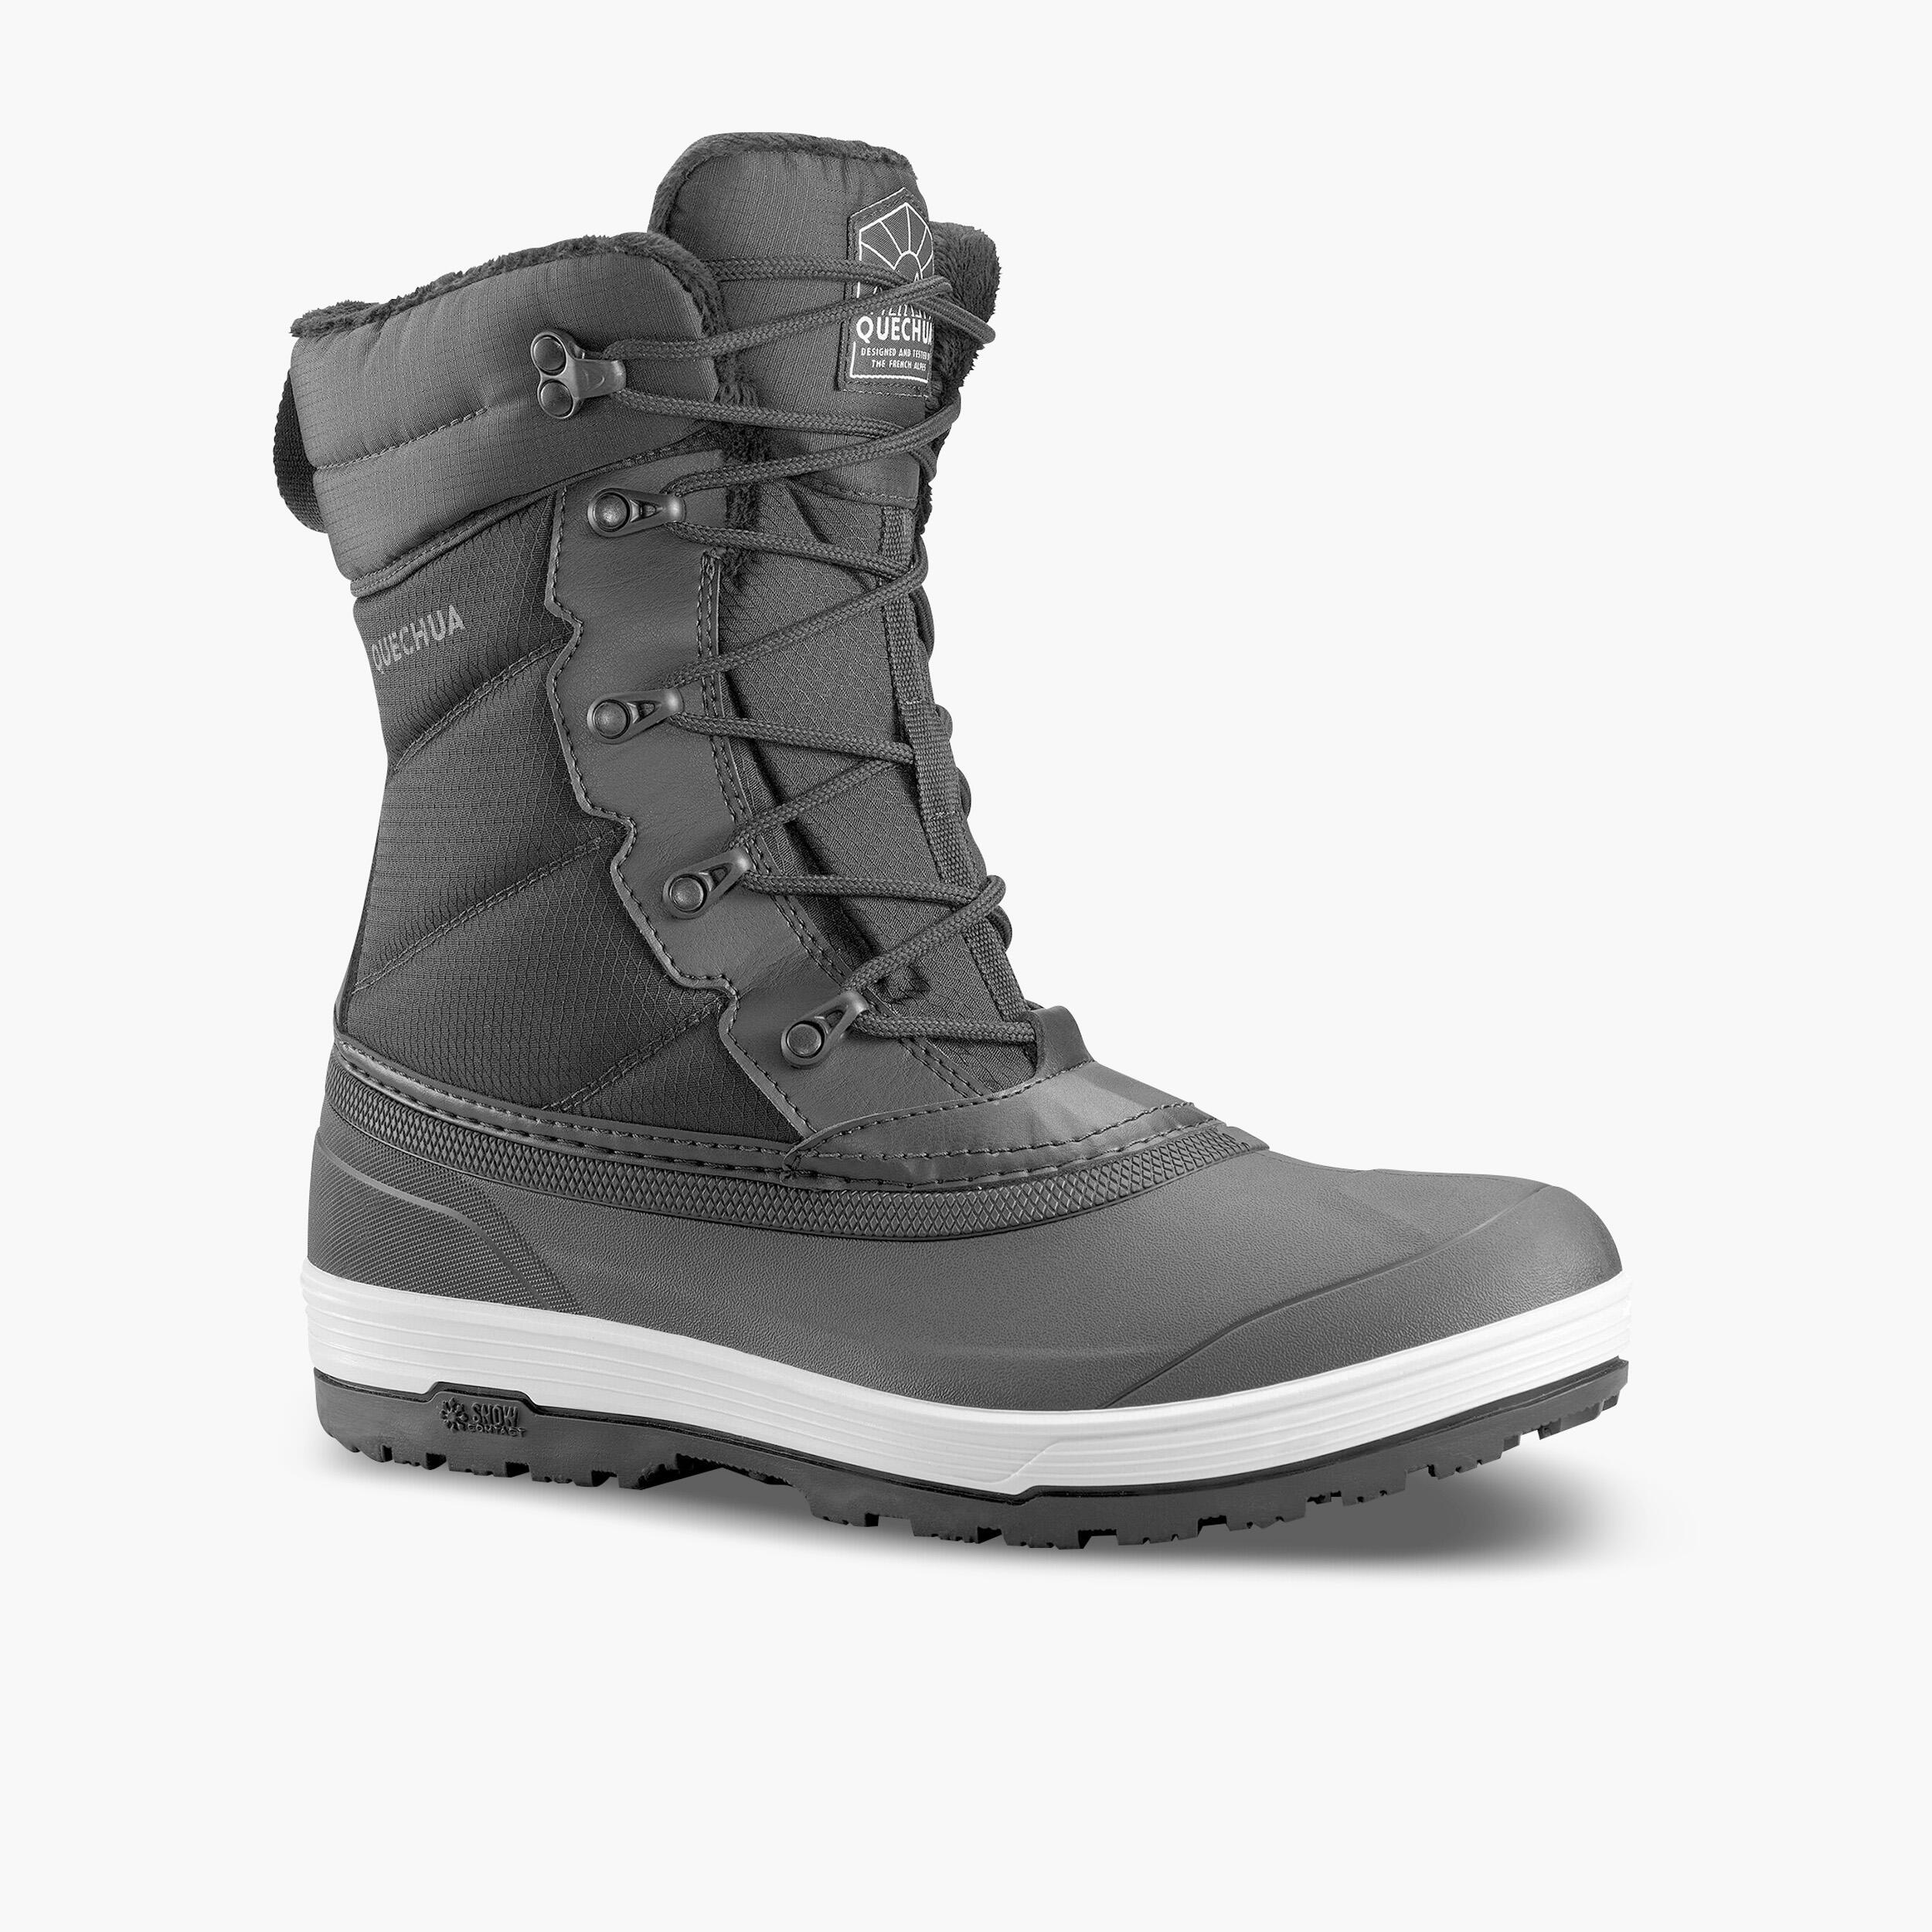 QUECHUA Warm Waterproof Snow Boots  - SH500 lace-up -  Men’s